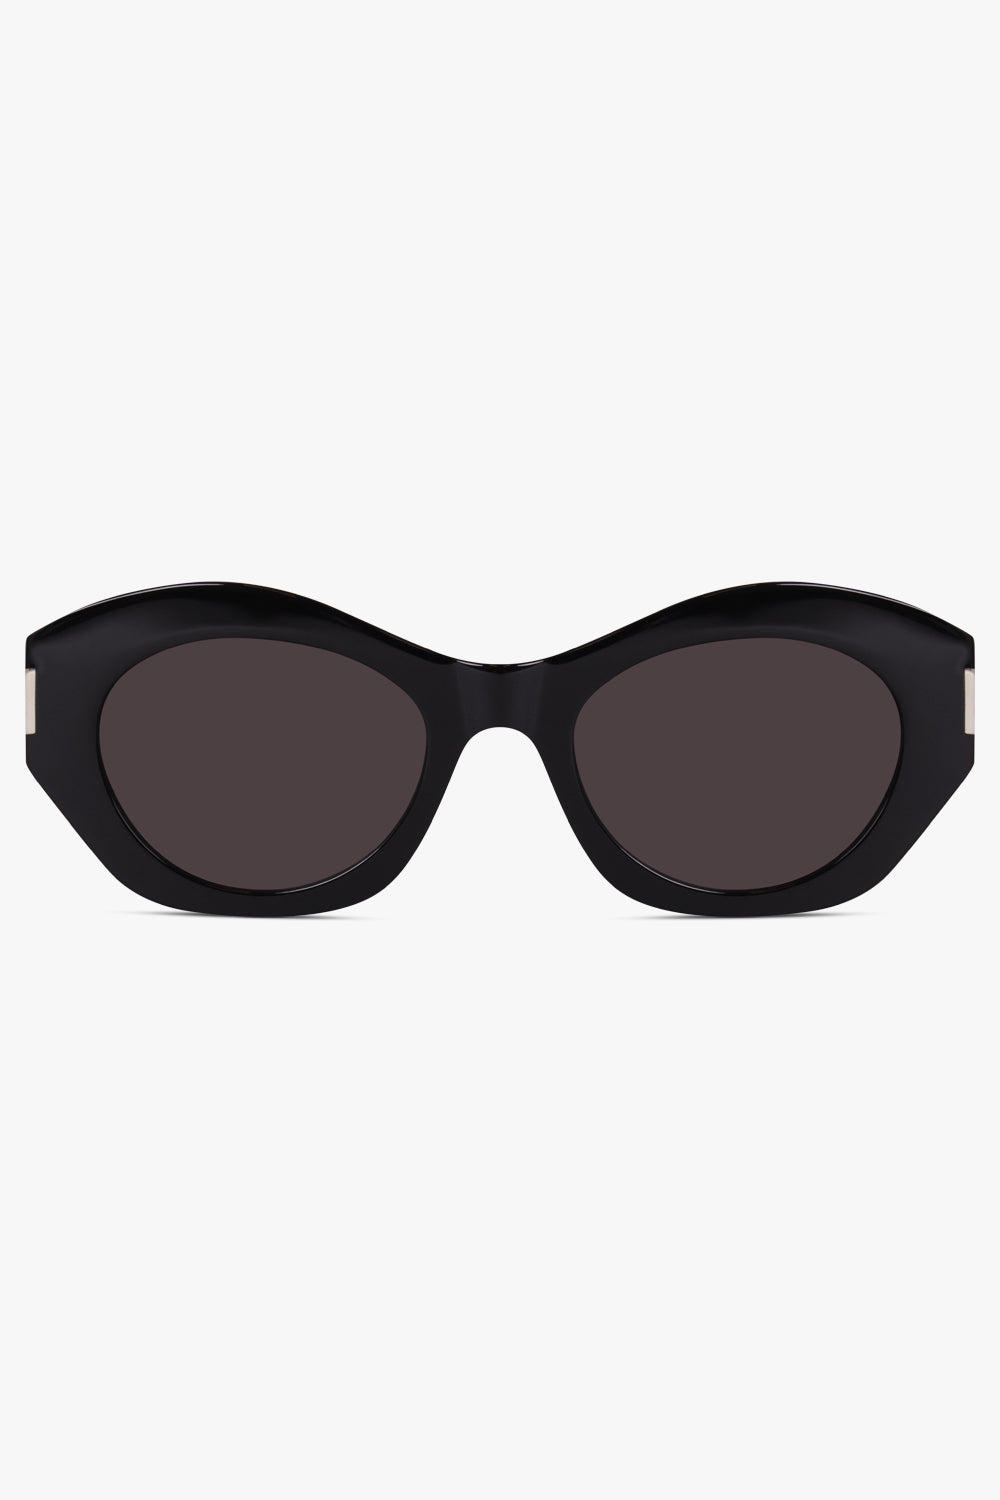 SAINT LAURENT ACCESSORIES Black 639 Sunglasses | Black